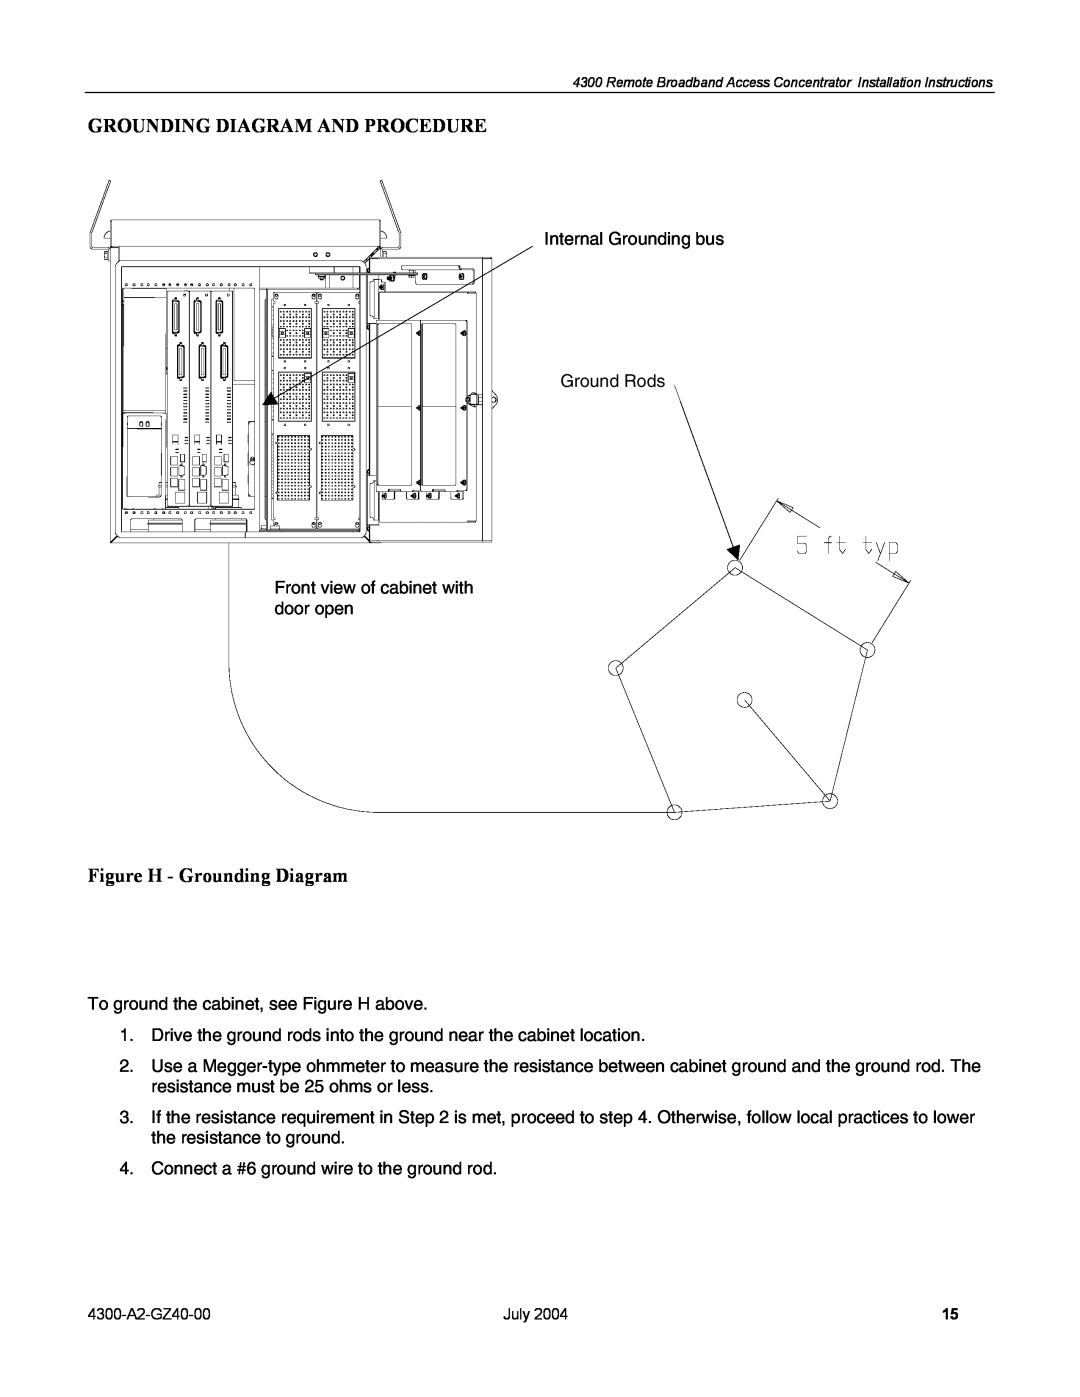 Paradyne 4300 installation instructions Grounding Diagram And Procedure, Figure H - Grounding Diagram 